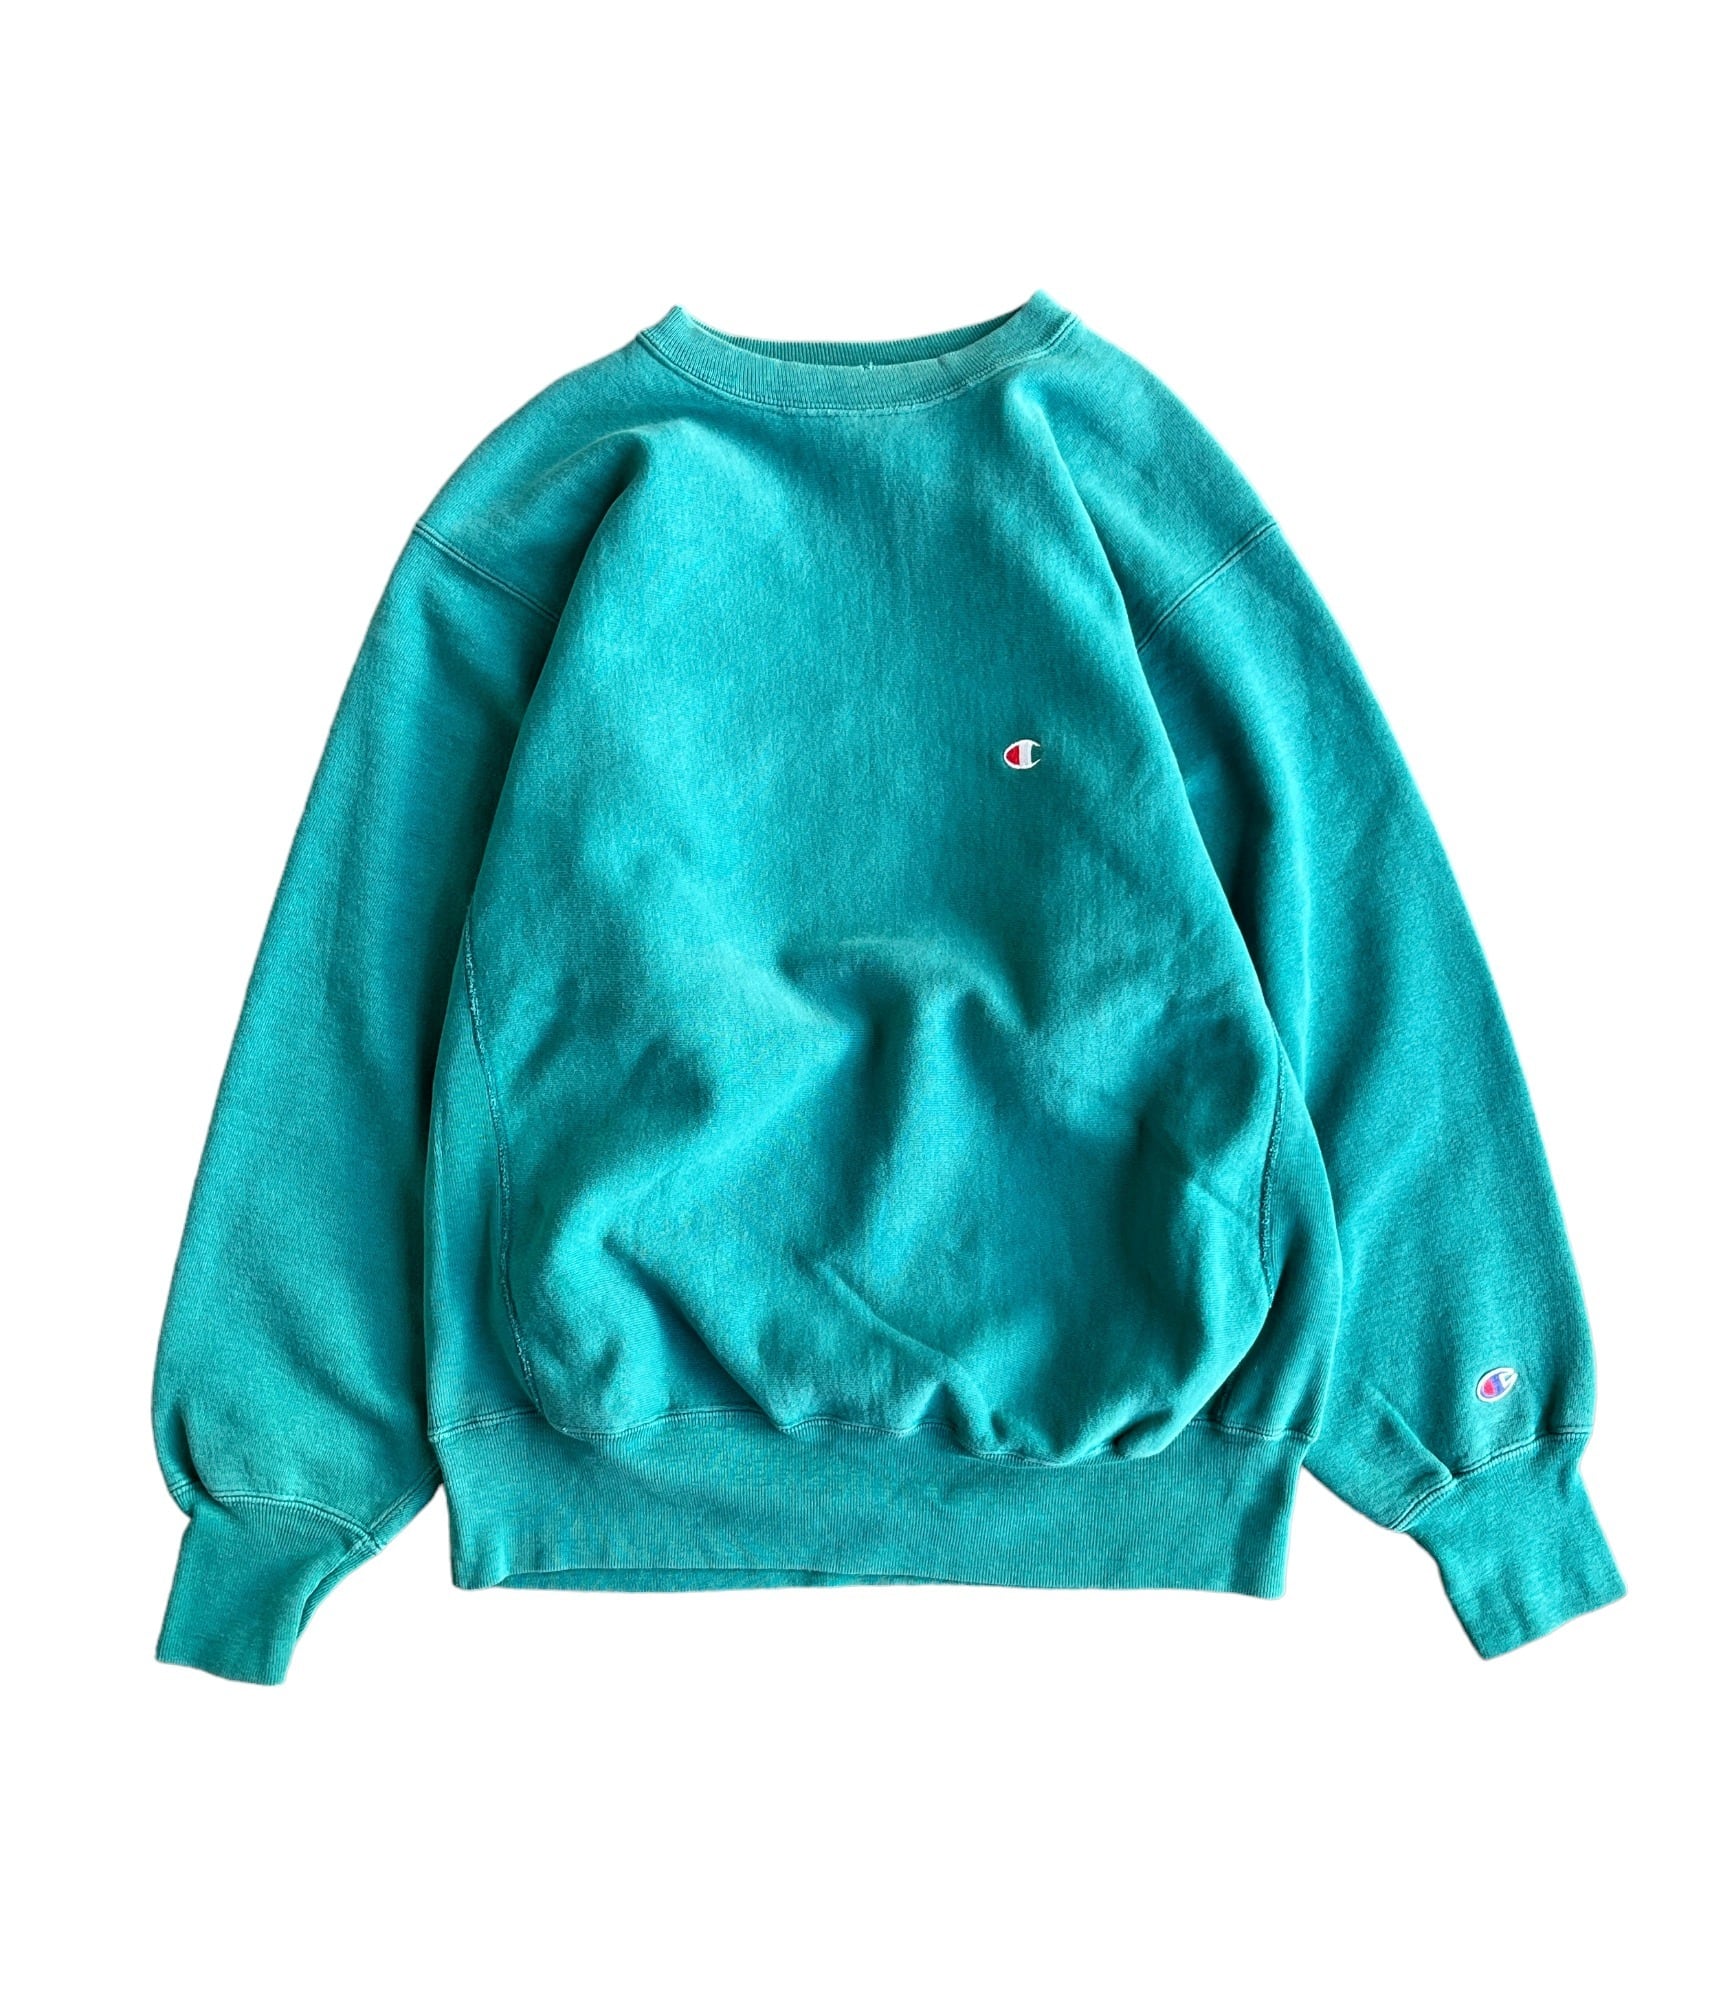 Vintage 90s XL Champion reverse weave sweatshirt -Turquoise blue 